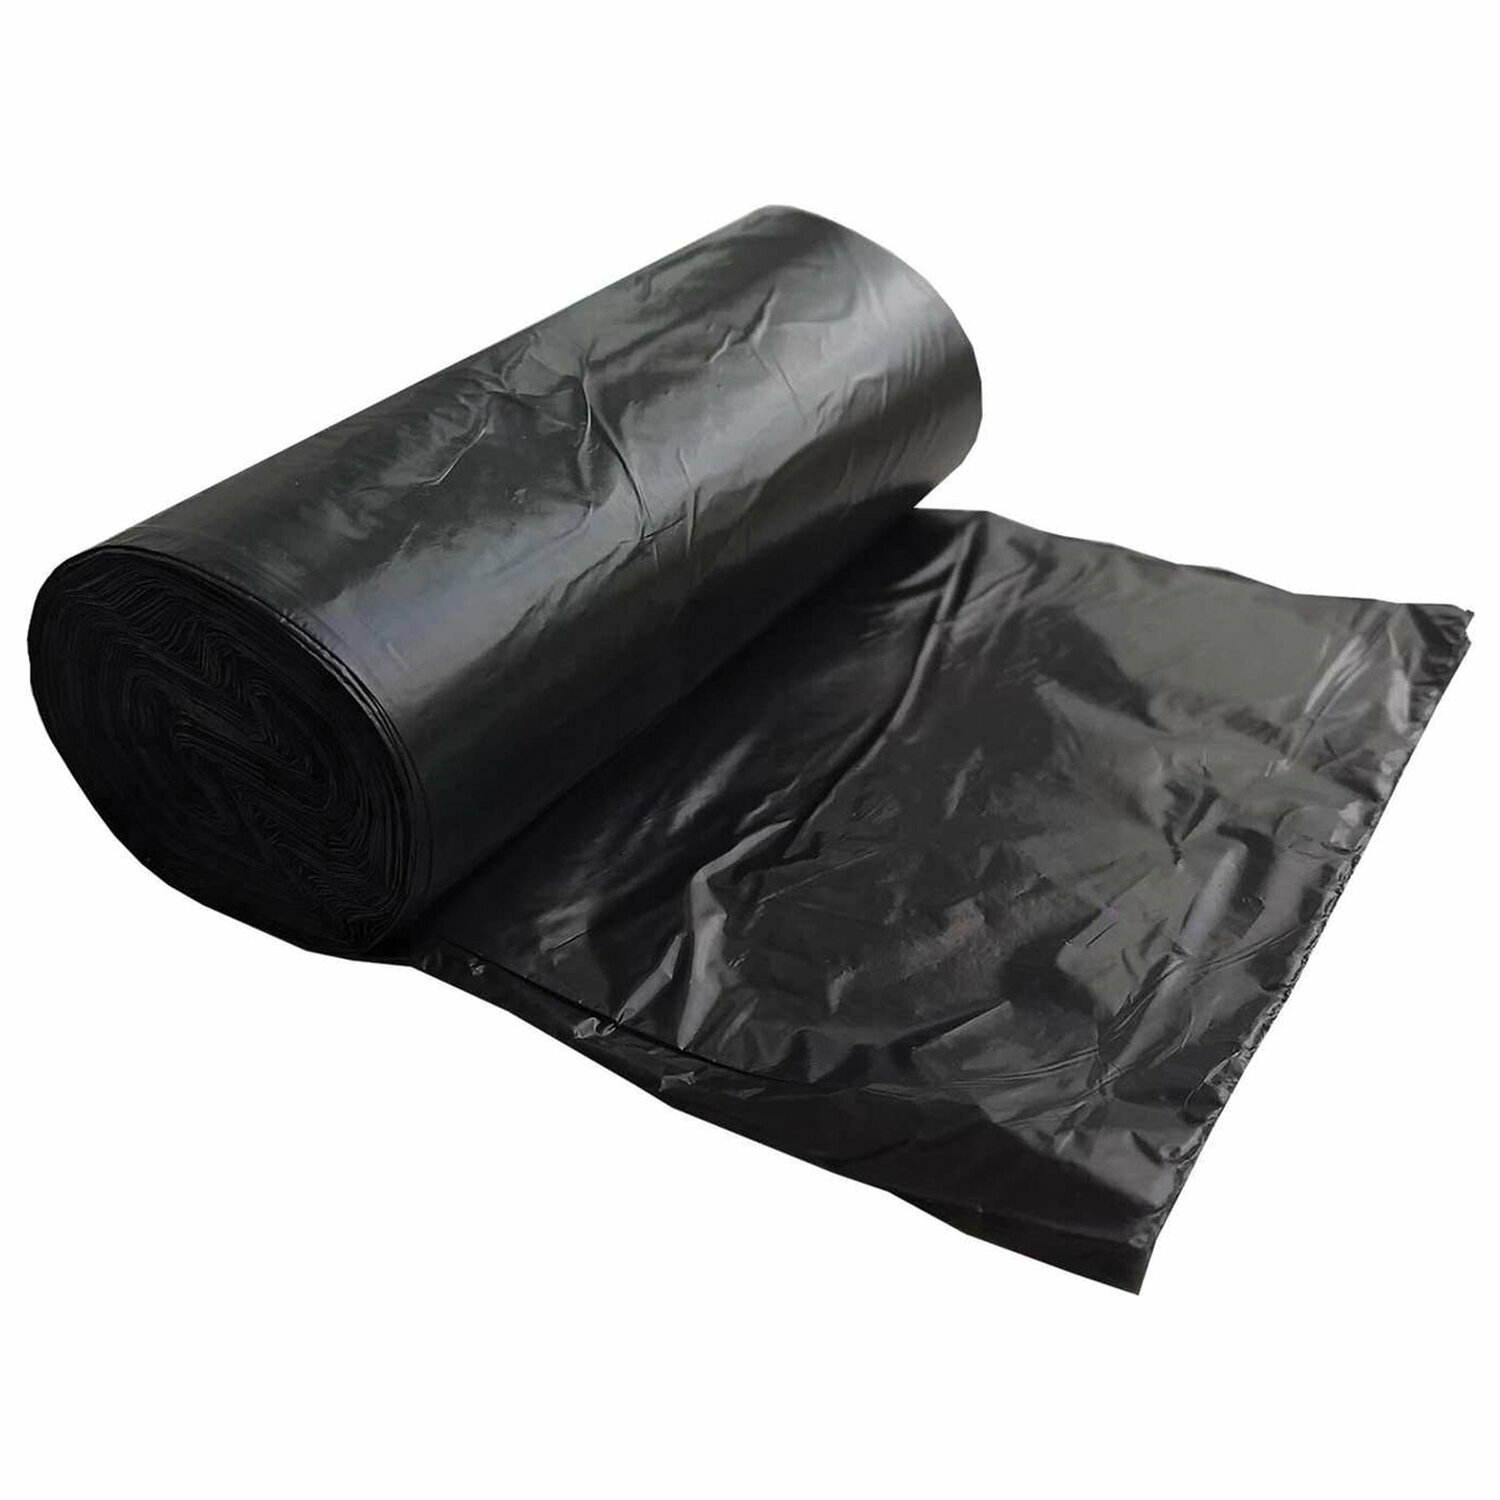 Мешки для мусора 60 л, черные, в рулоне 20 шт, ПНД, 10 мкм, 60х72 см, стандарт, концепция быта, 0053